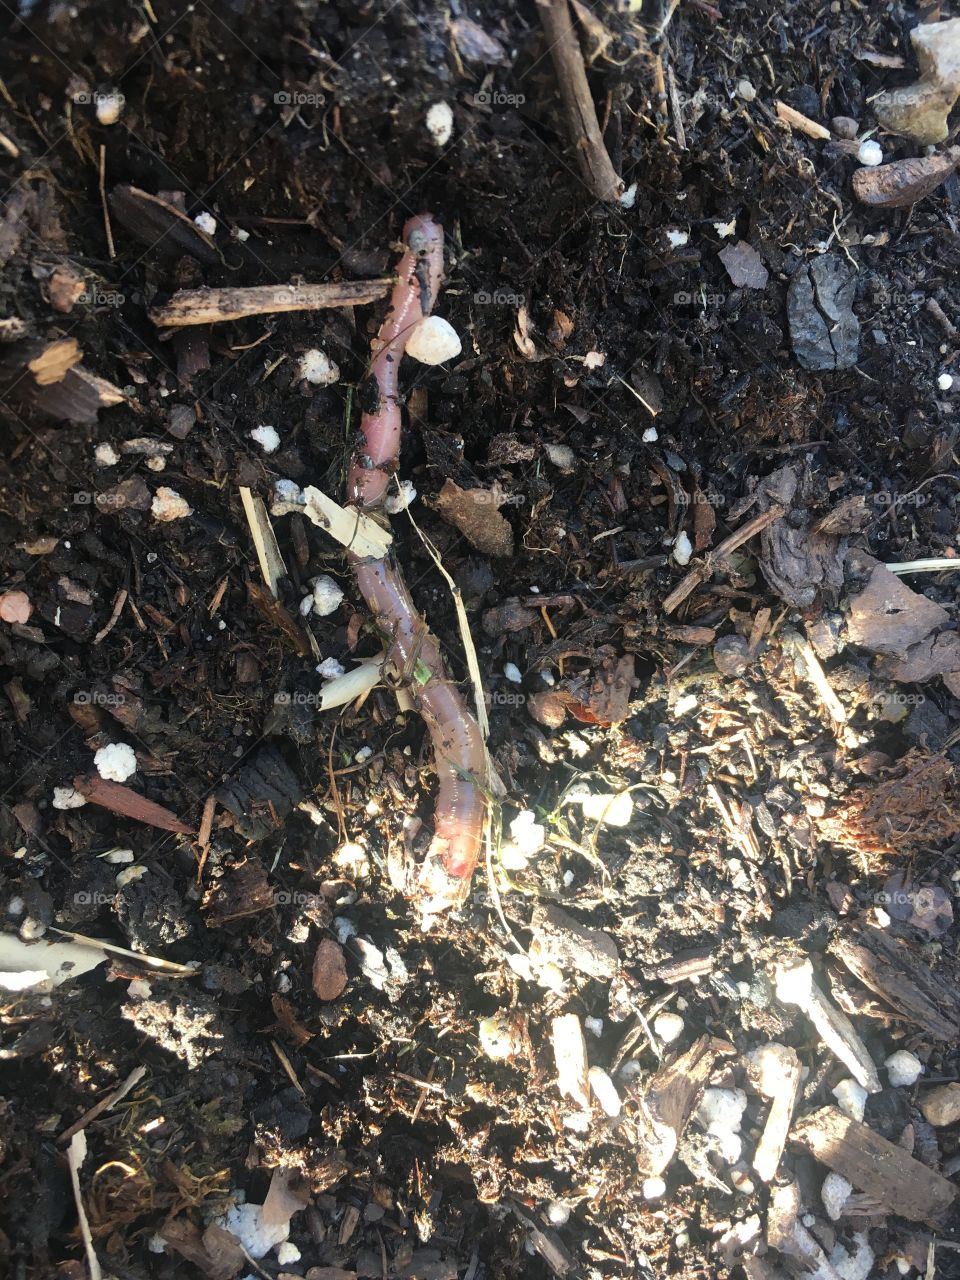 Earthworm in the dirt 